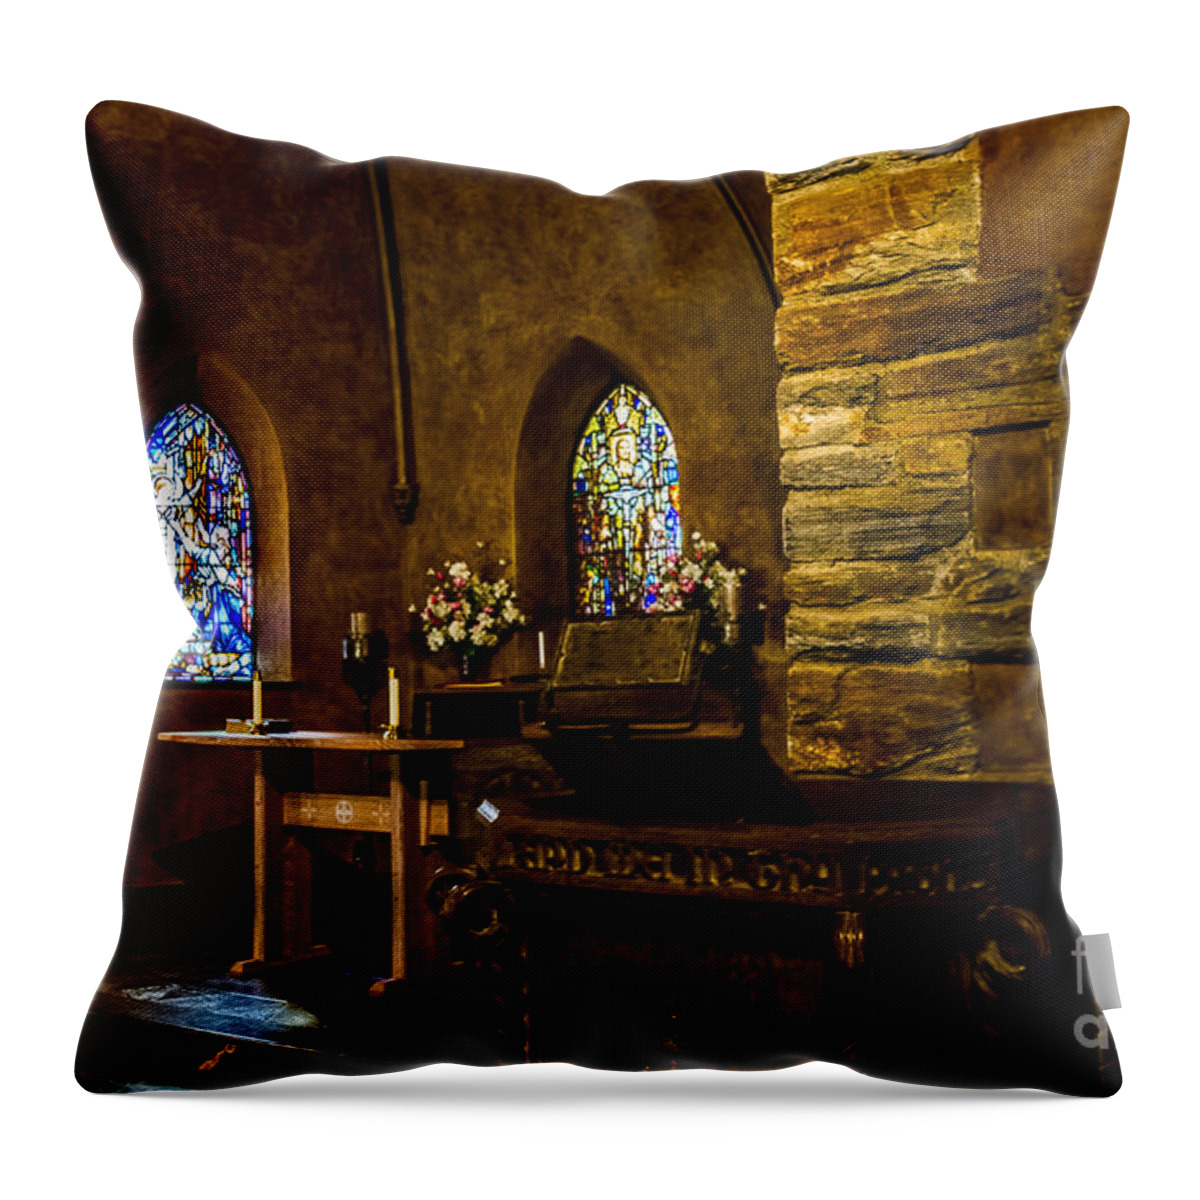 Bill Norton Throw Pillow featuring the photograph The Garrett Chapel by William Norton